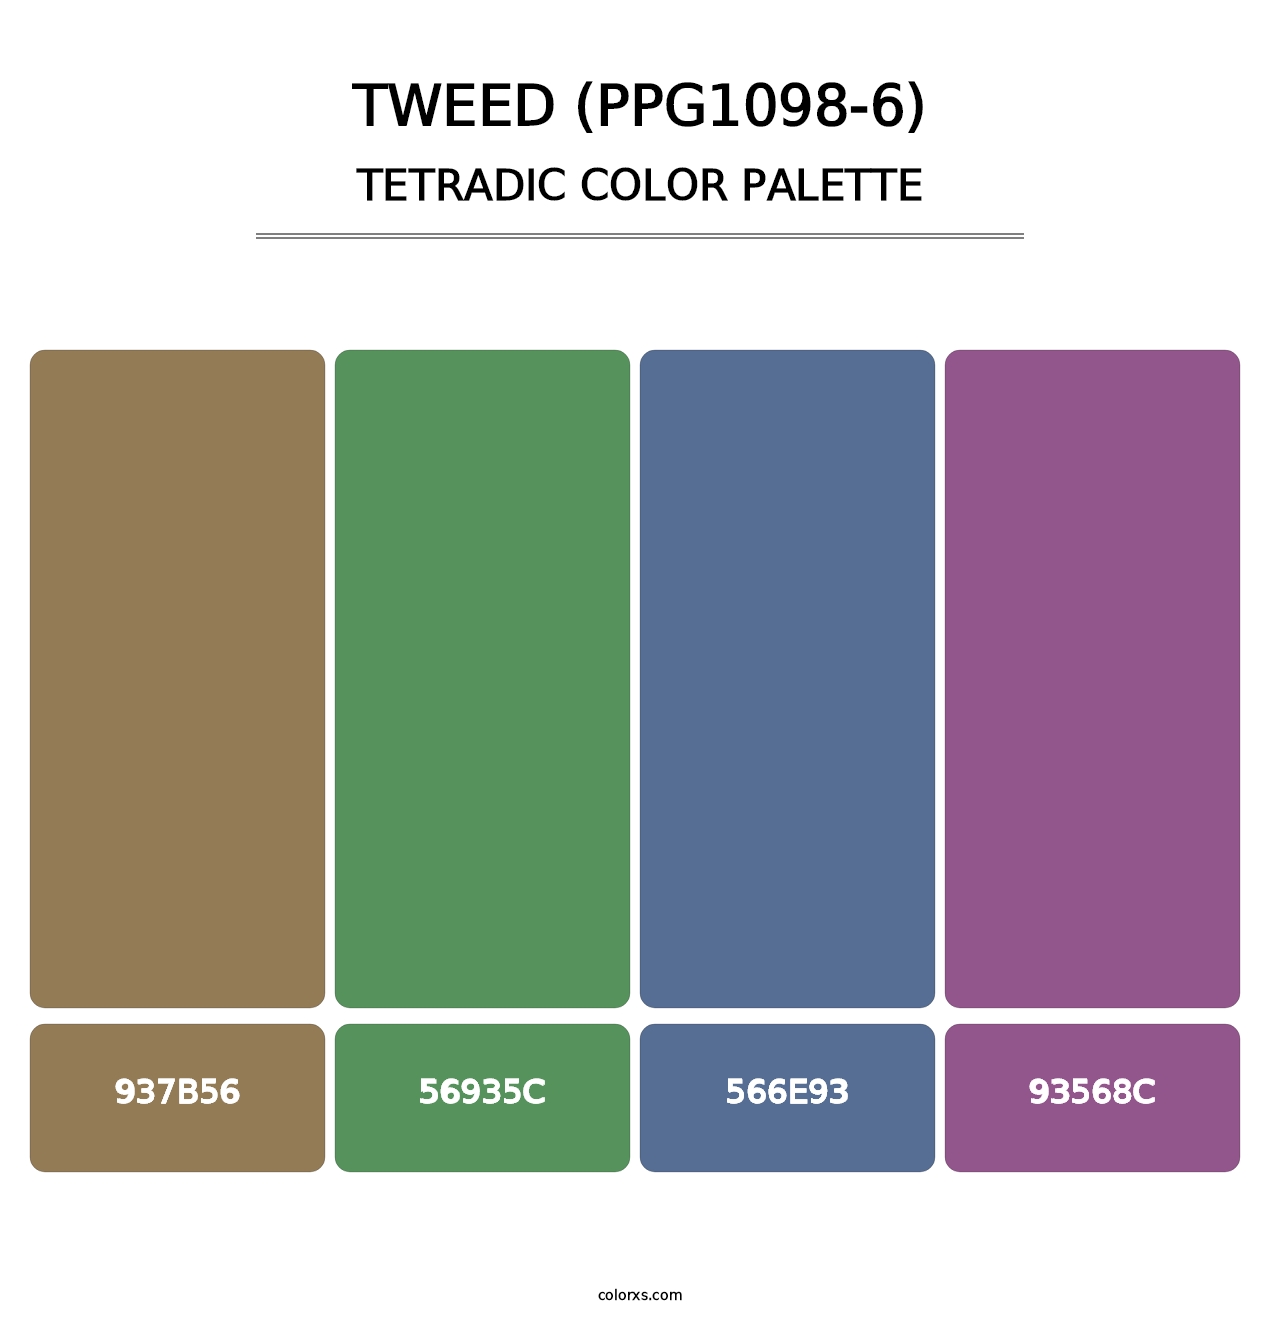 Tweed (PPG1098-6) - Tetradic Color Palette